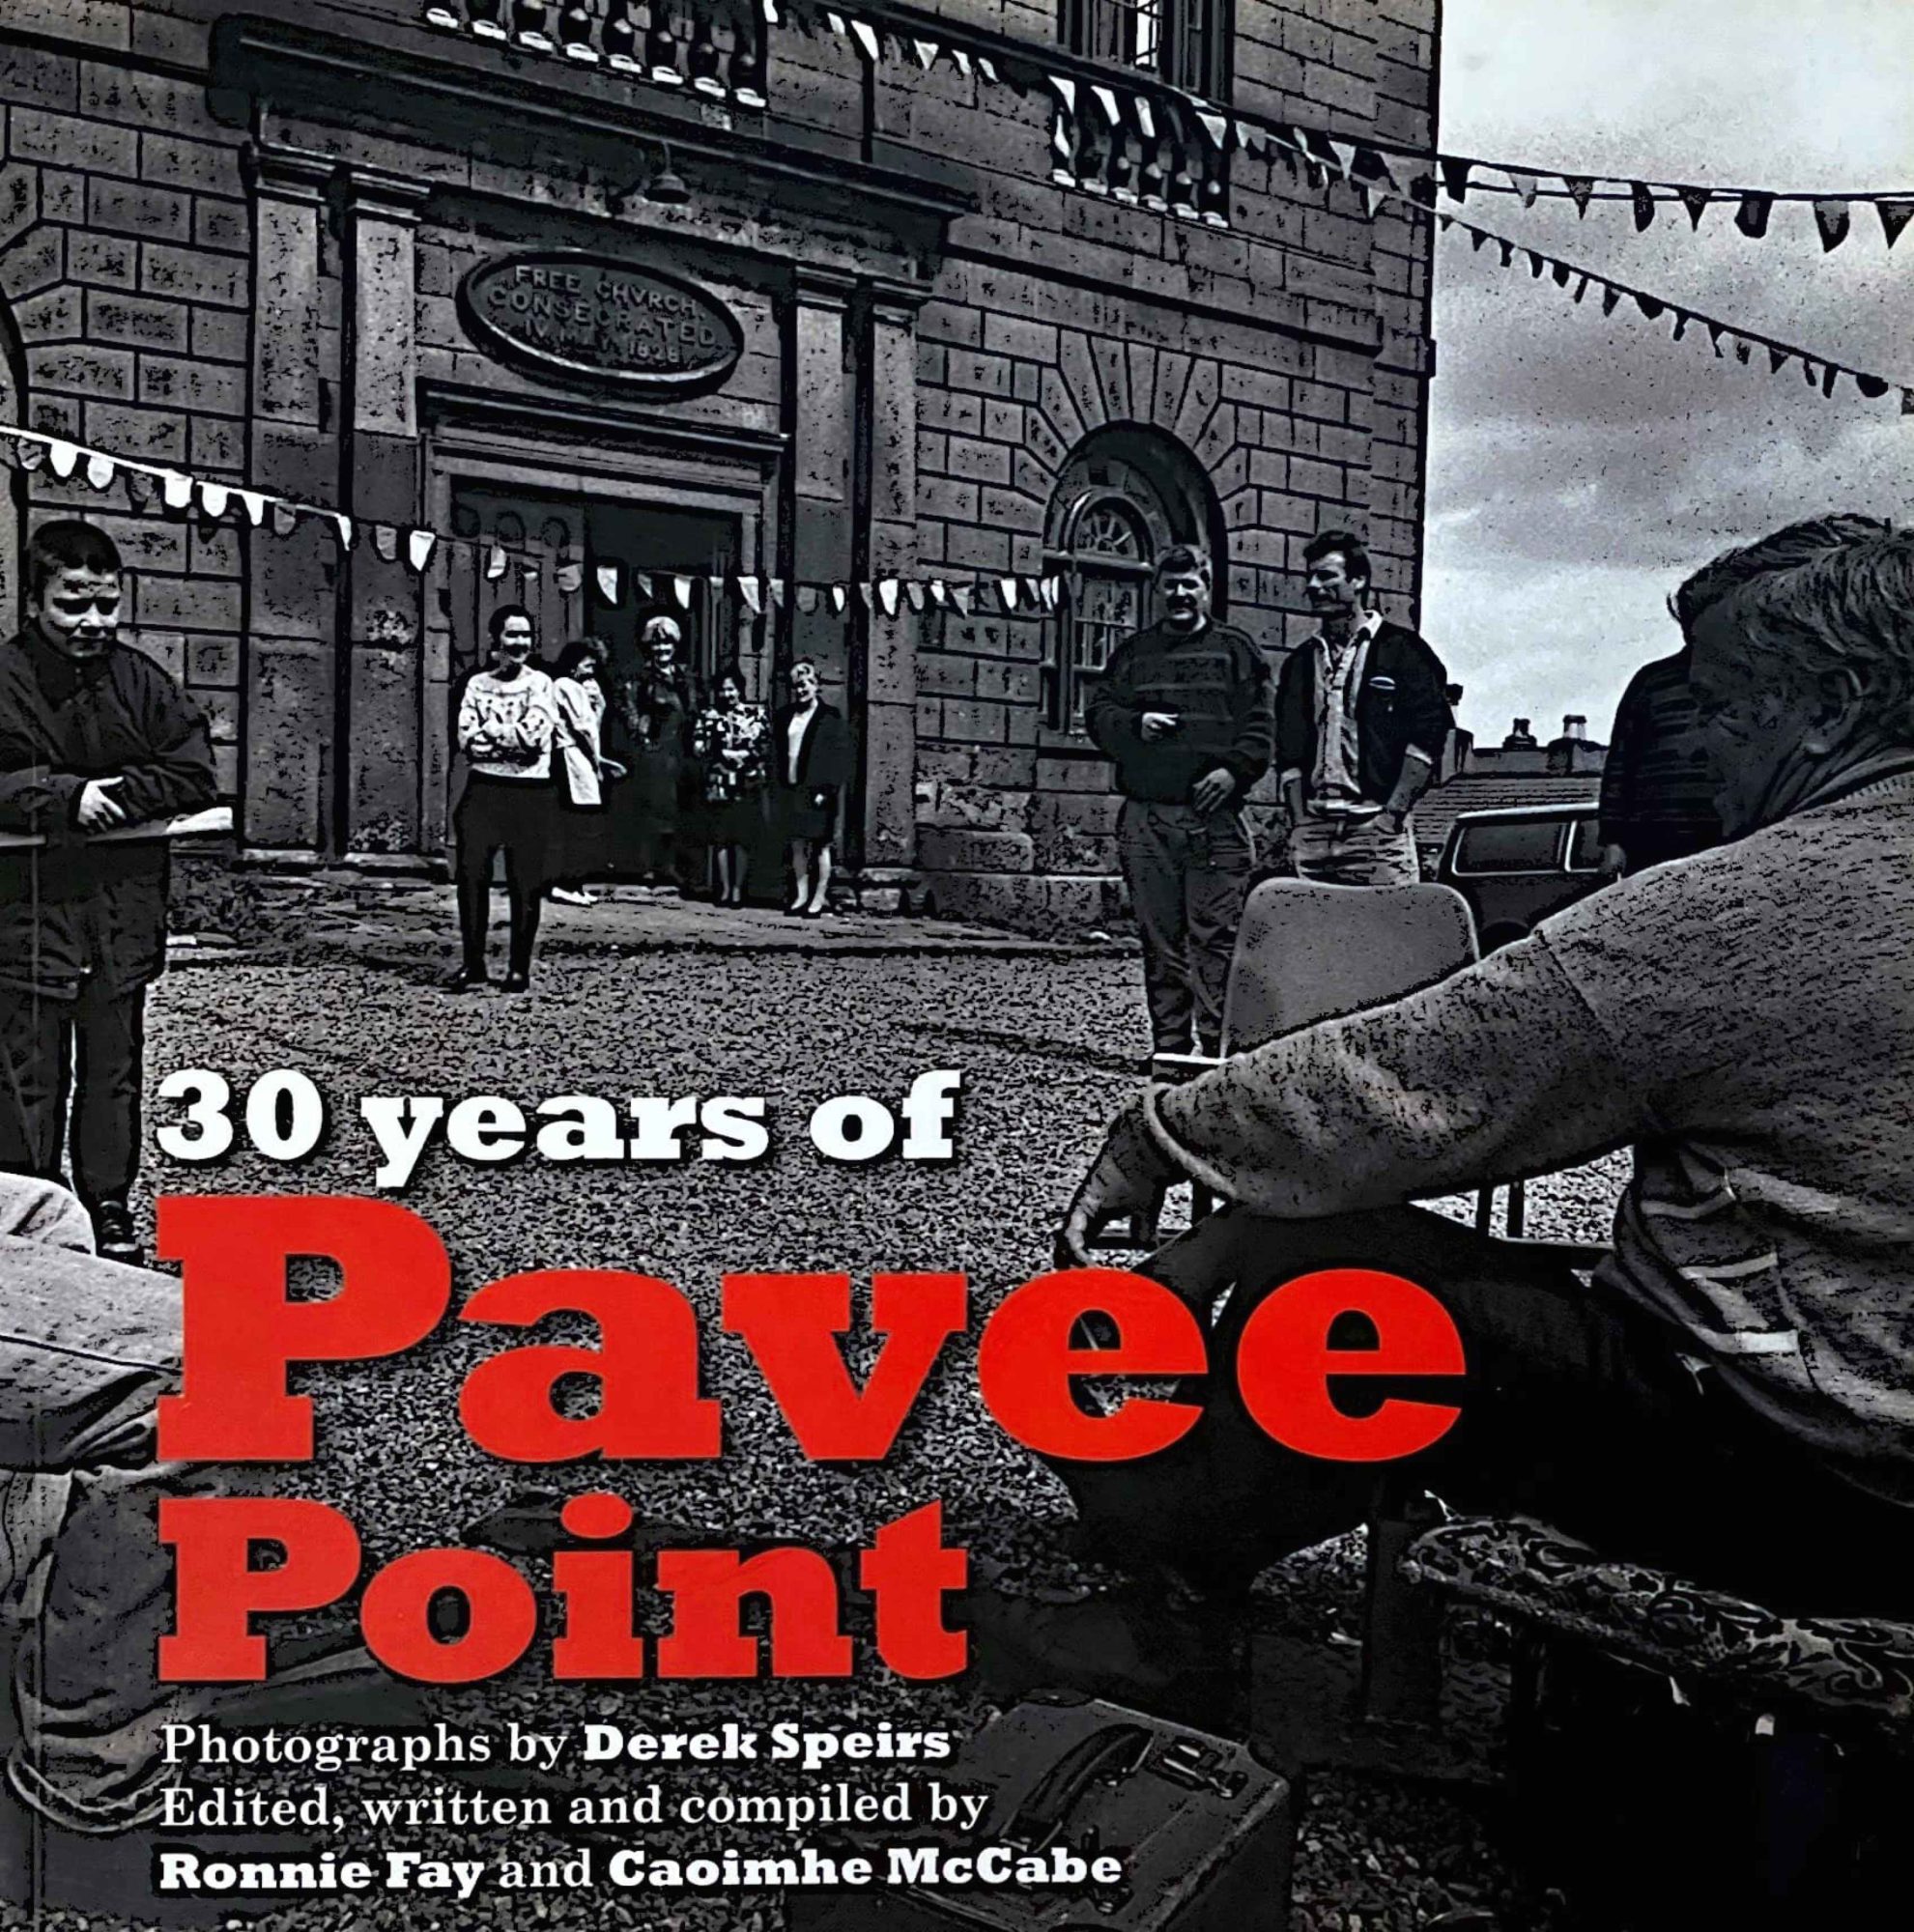 30 Years of Pavee Point, Derek Speirs